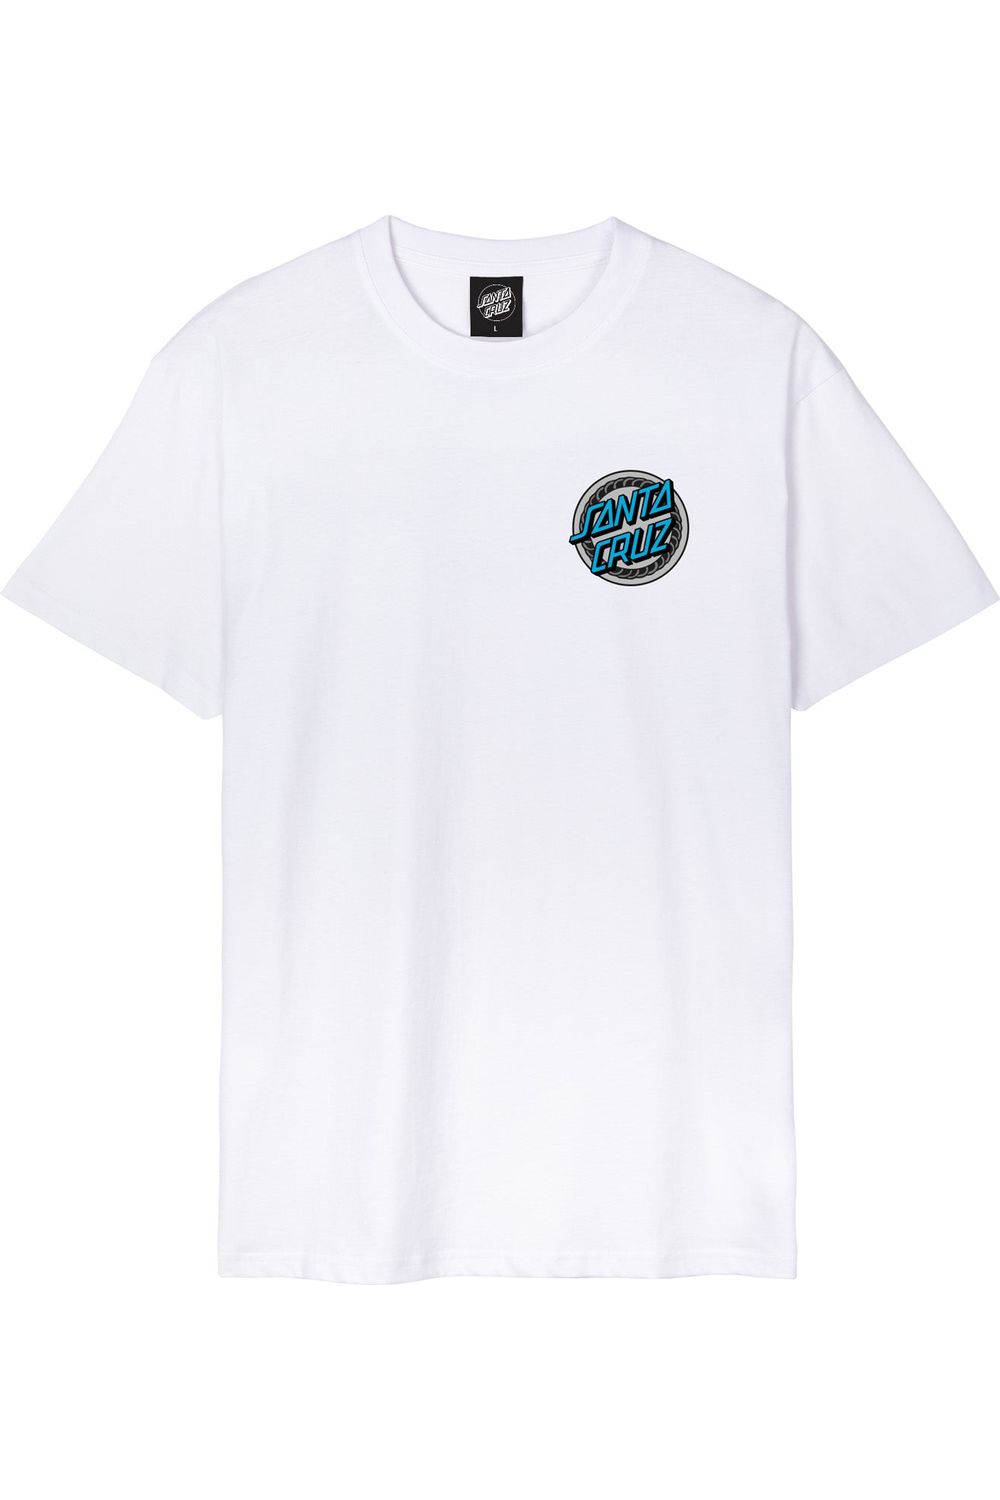 Santa Cruz Dressen Rose Crew One T-Shirt White